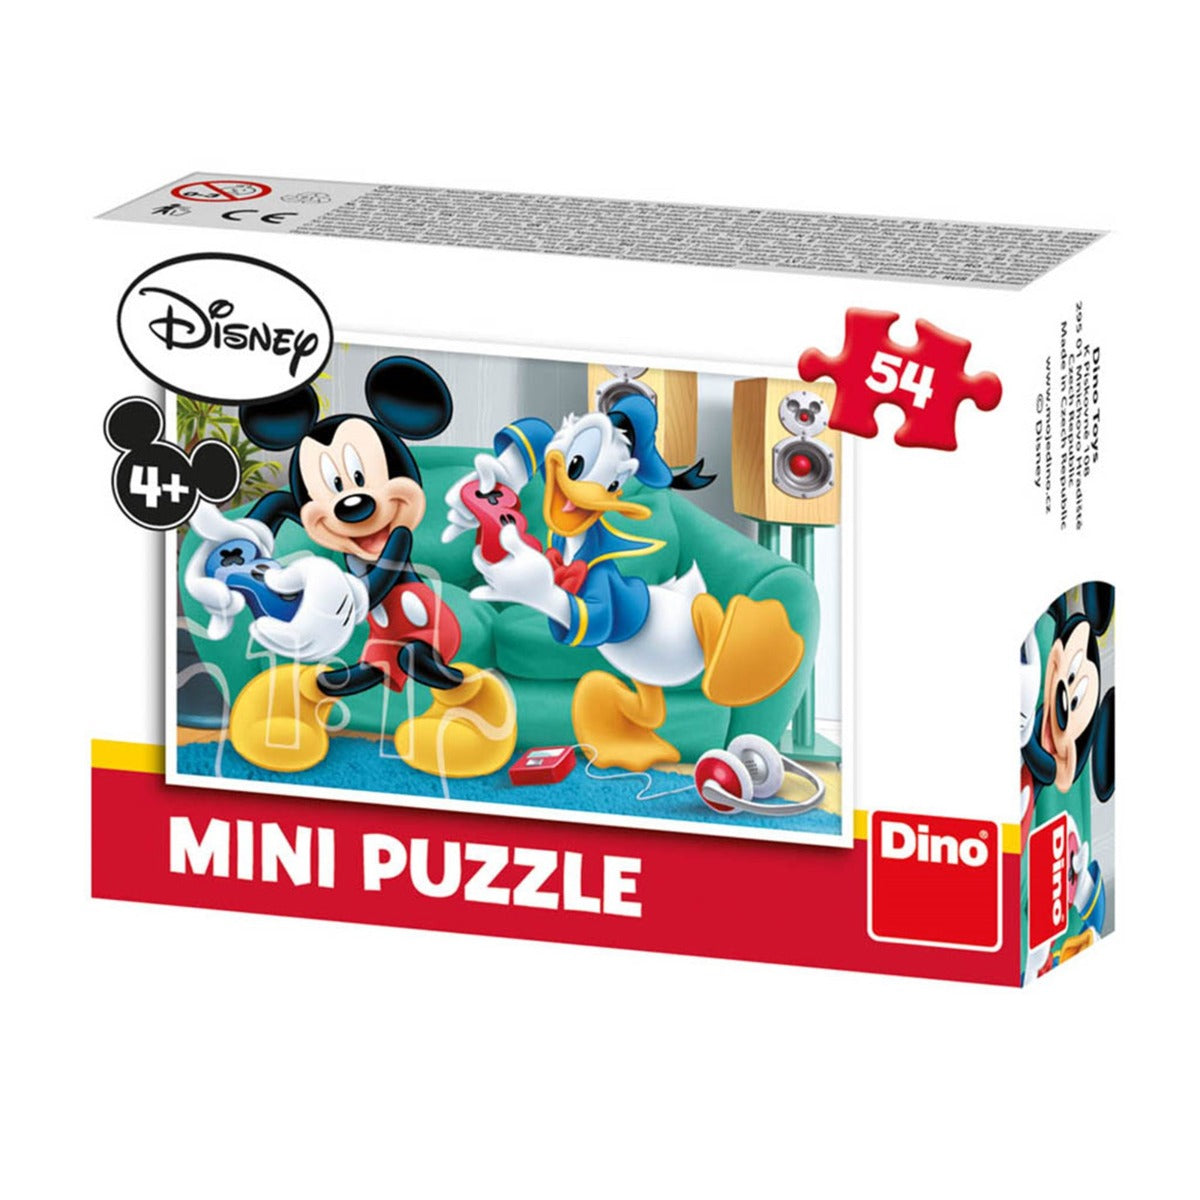 Puslespil - Minipuslespil: Disney - Mickey Mouse, 54 brikker